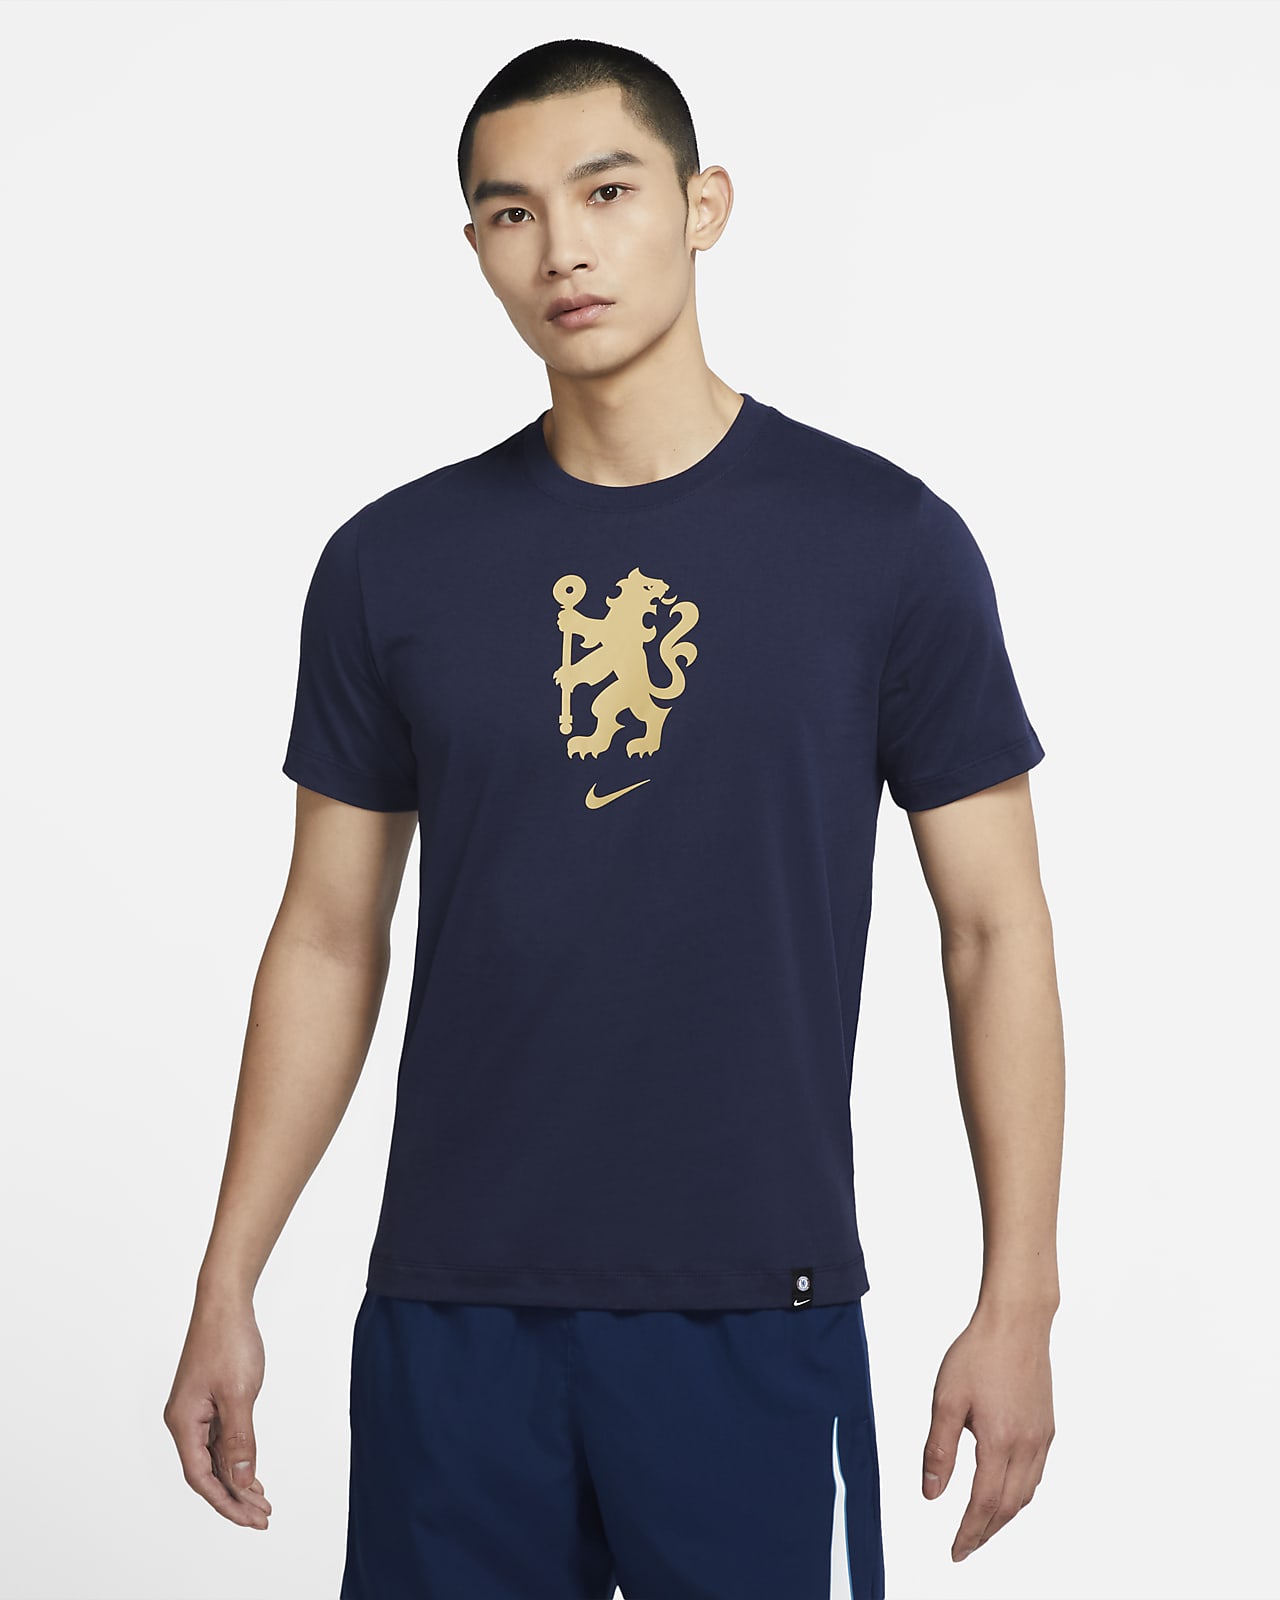 Chelsea FC Men's T-Shirt